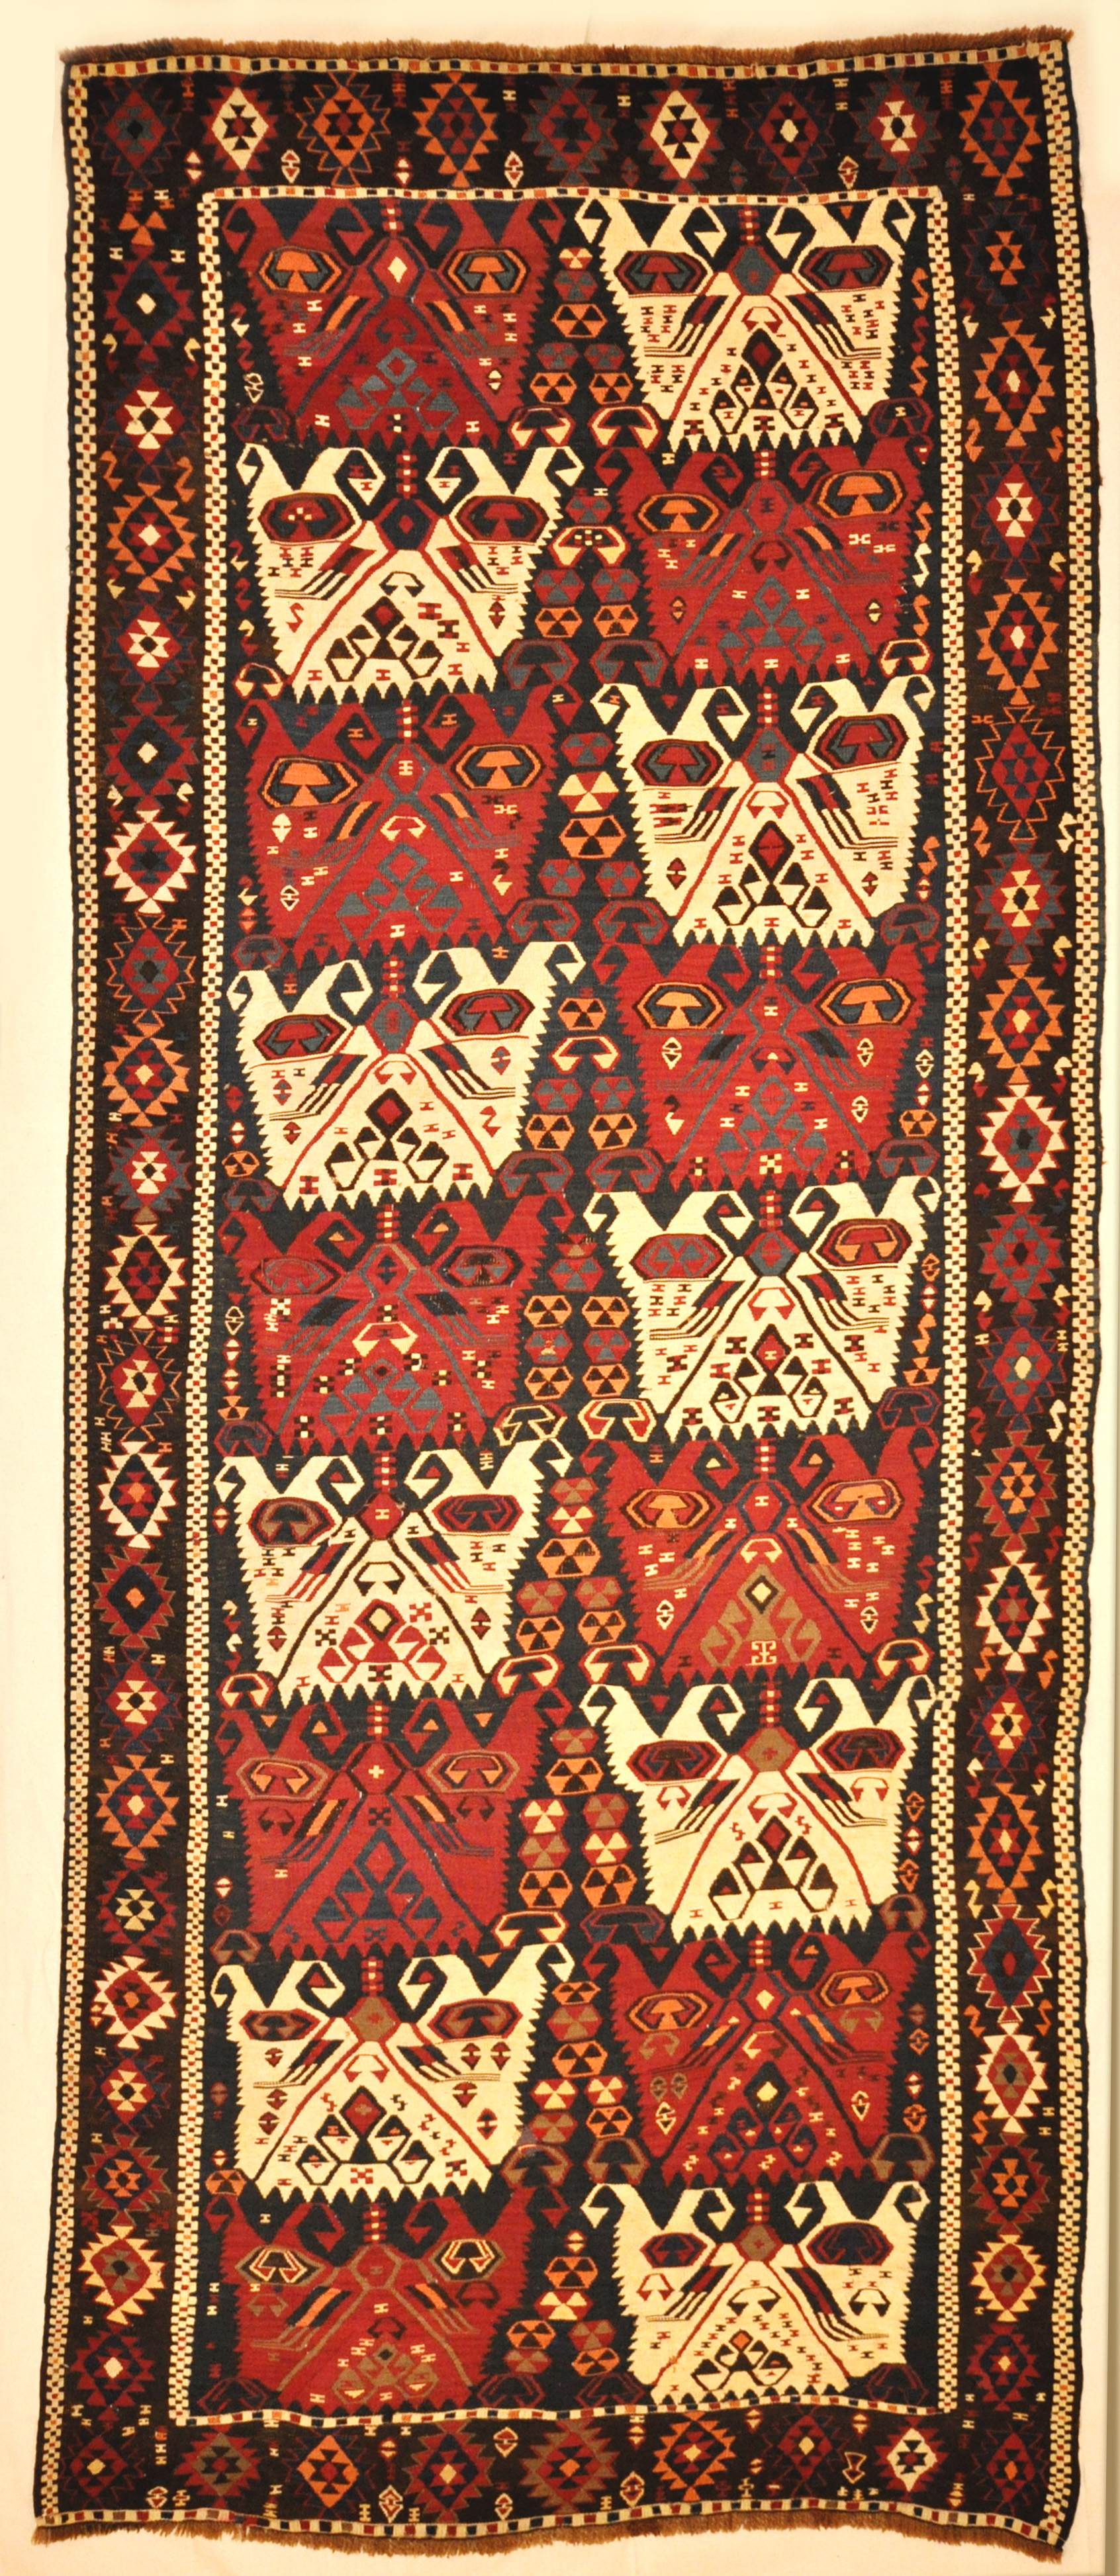 Rare Antique Kelim Tribal Rug Featuring Goddess of Anatolia and Phoenixes Genuine Woven Carpet Art Santa Barbara Design Center Rugs and More